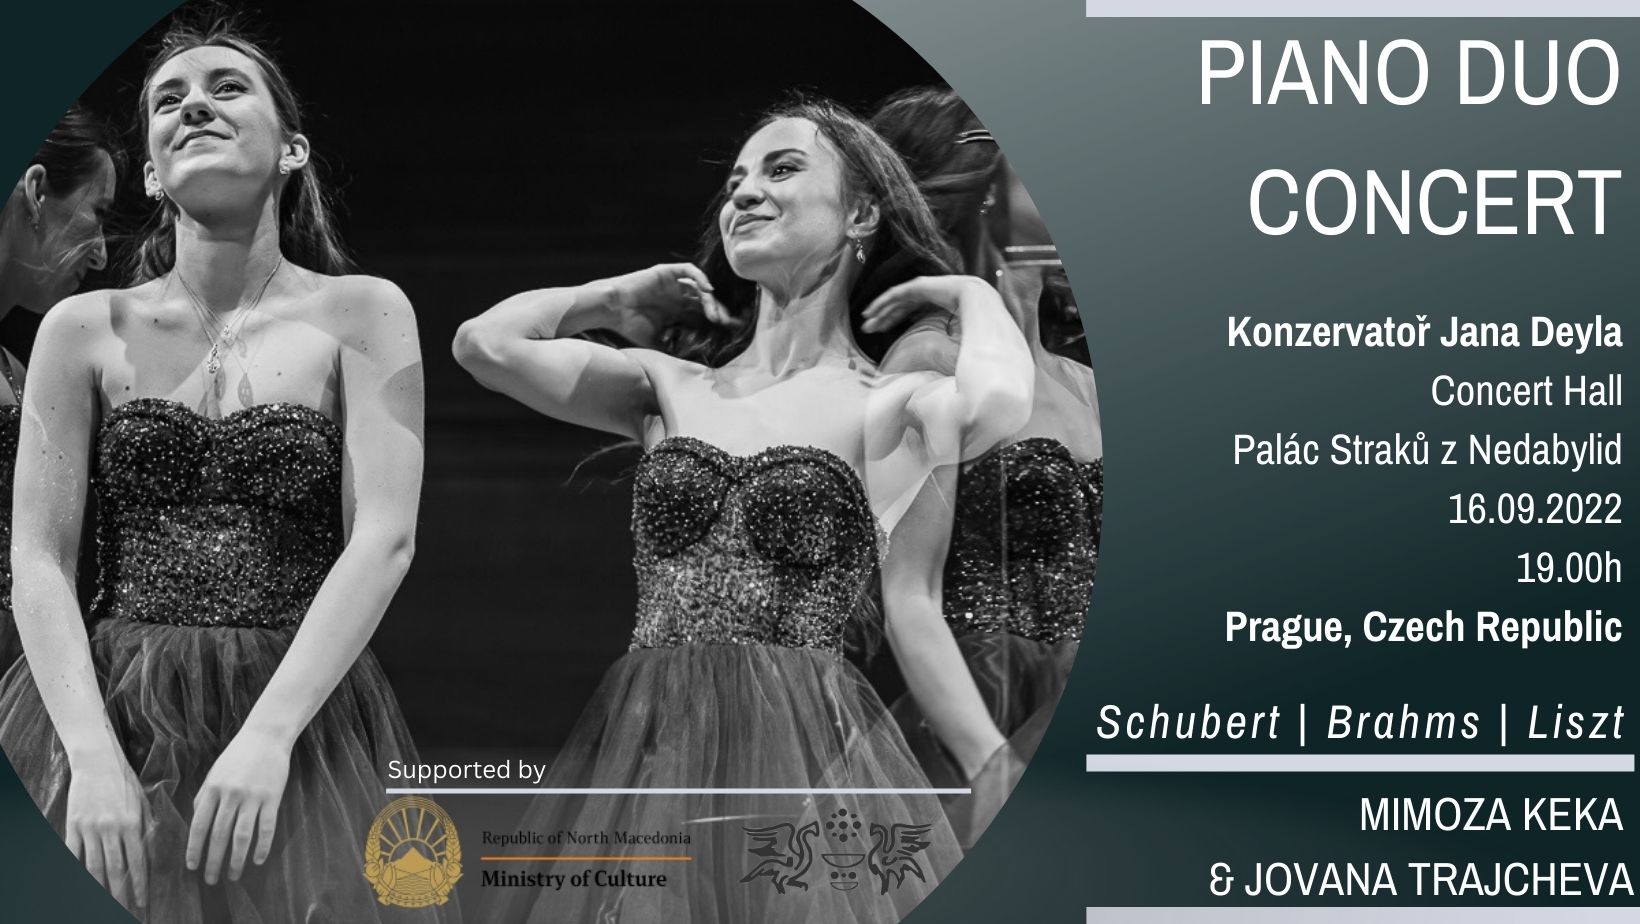 Concert in Prague, Czech Republic and Festive Rhapsody in Skopje